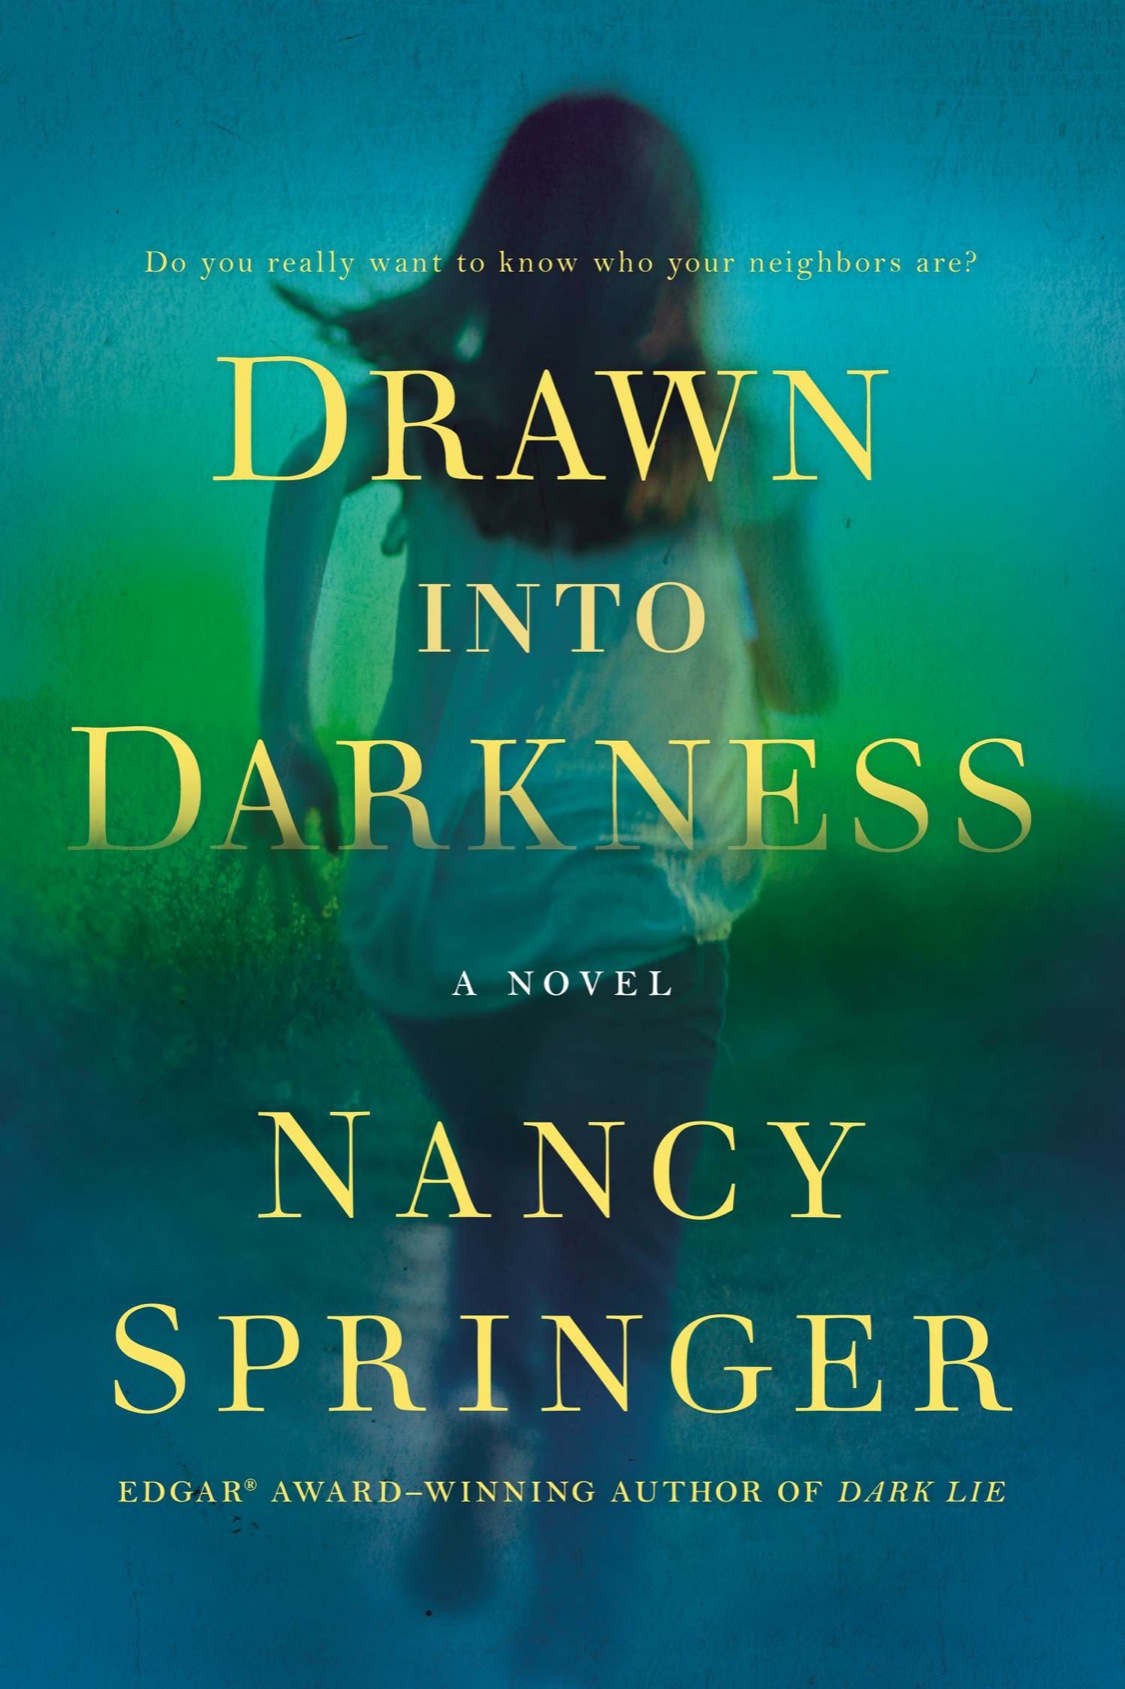 Drawn Into Darkness (2013) by Nancy Springer